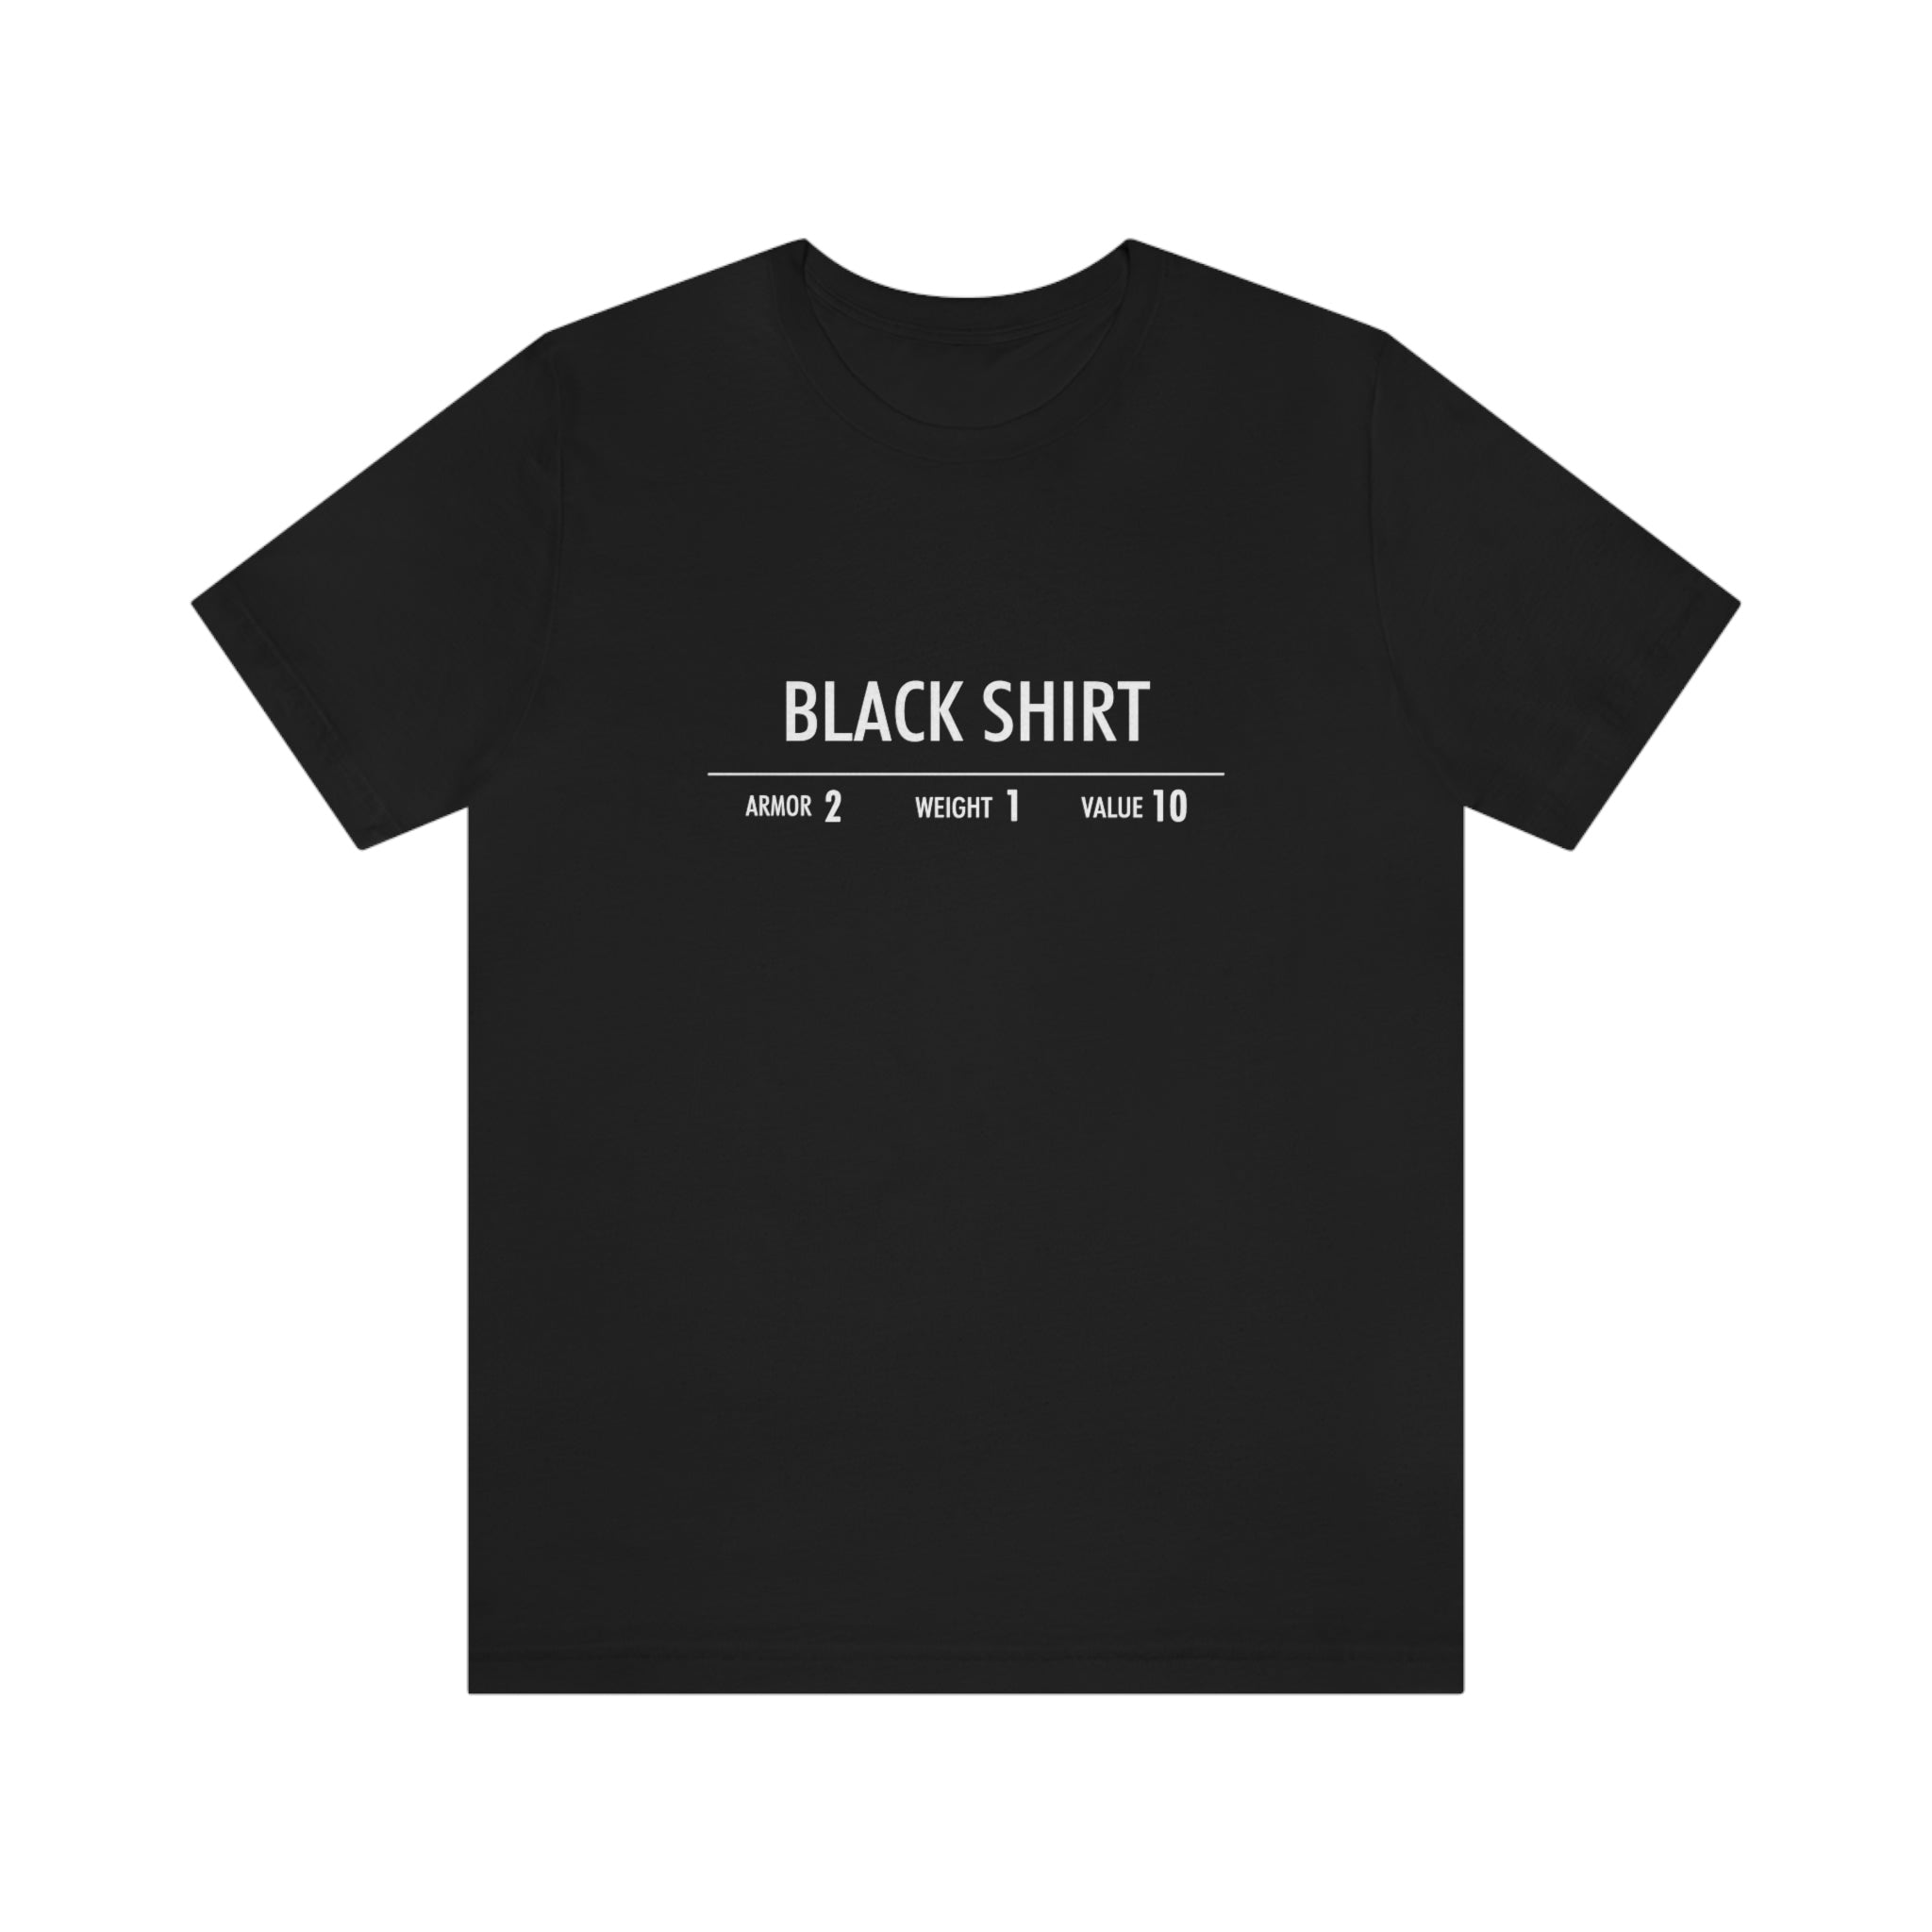 Black Shirt - Skyrim Inspired